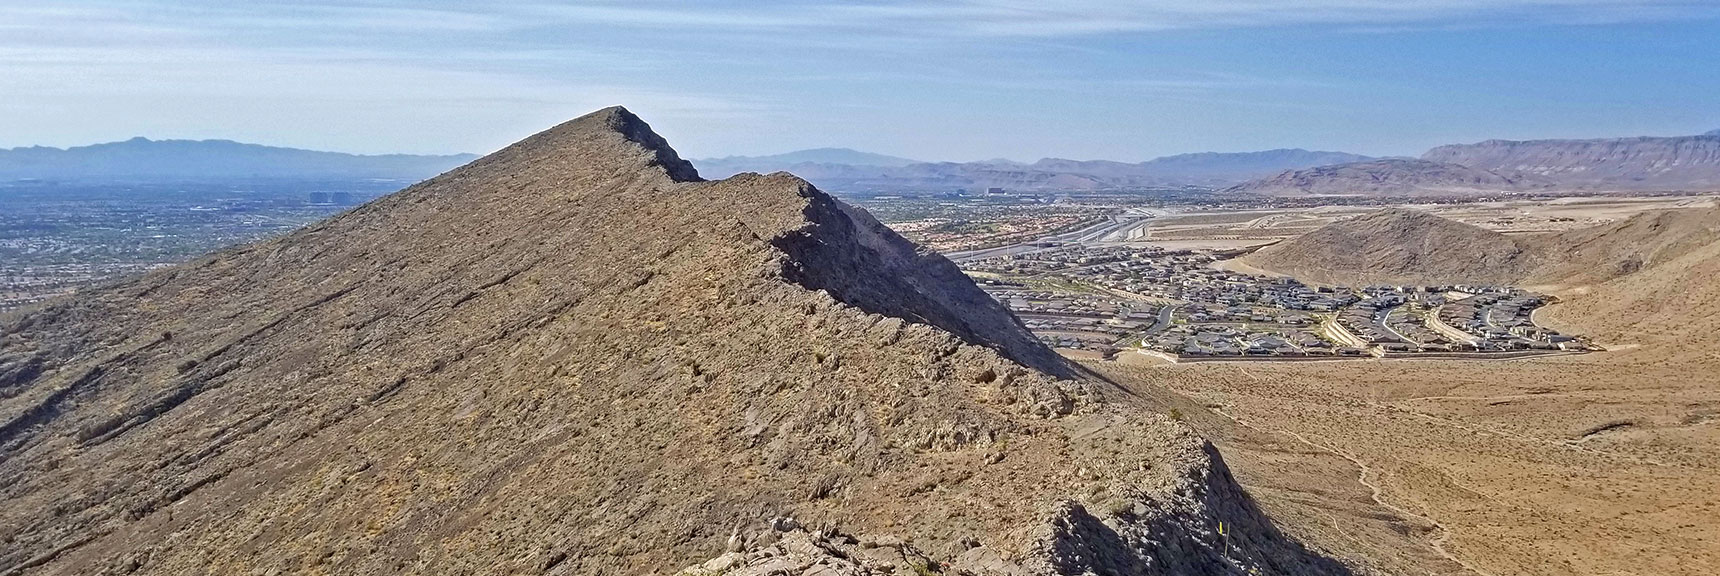 View to Southwest True Summit of Cheyenne Mt. Razor's Edge Thin Ridgeline | Cheyenne Mountain | Las Vegas, Nevada